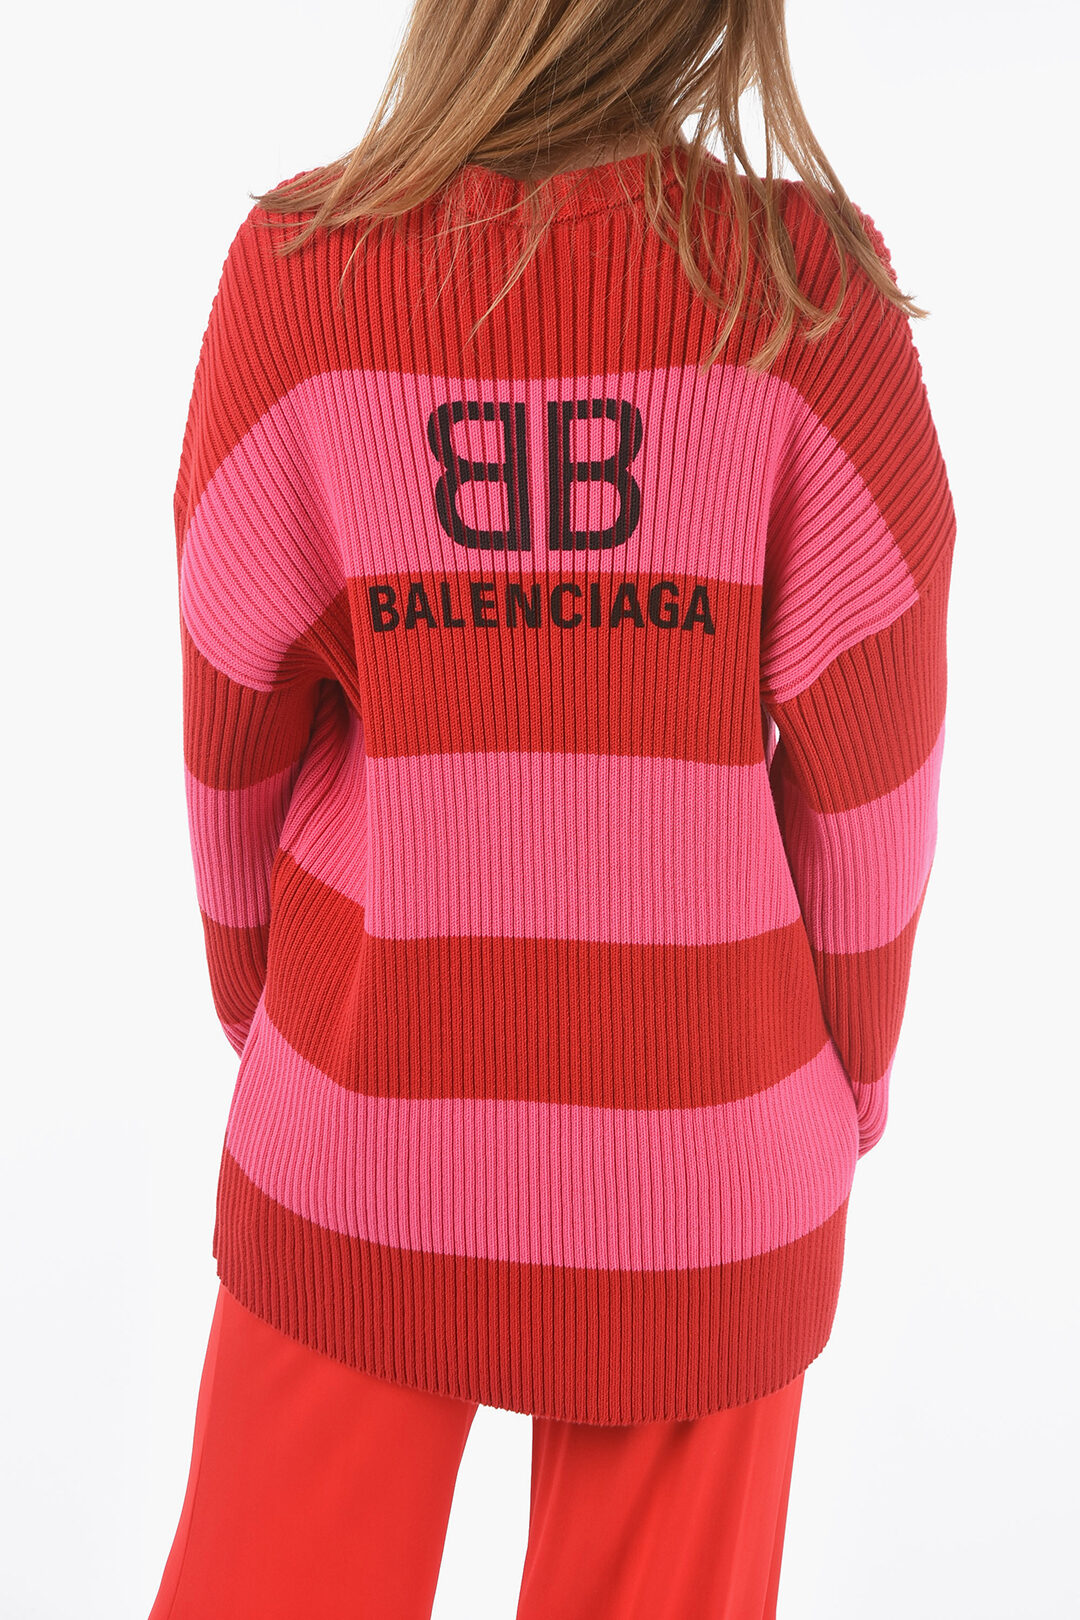 Balenciaga Crew Neck Awning Stripe Cotton UNISEX Pullover unisex men - Glamood Outlet